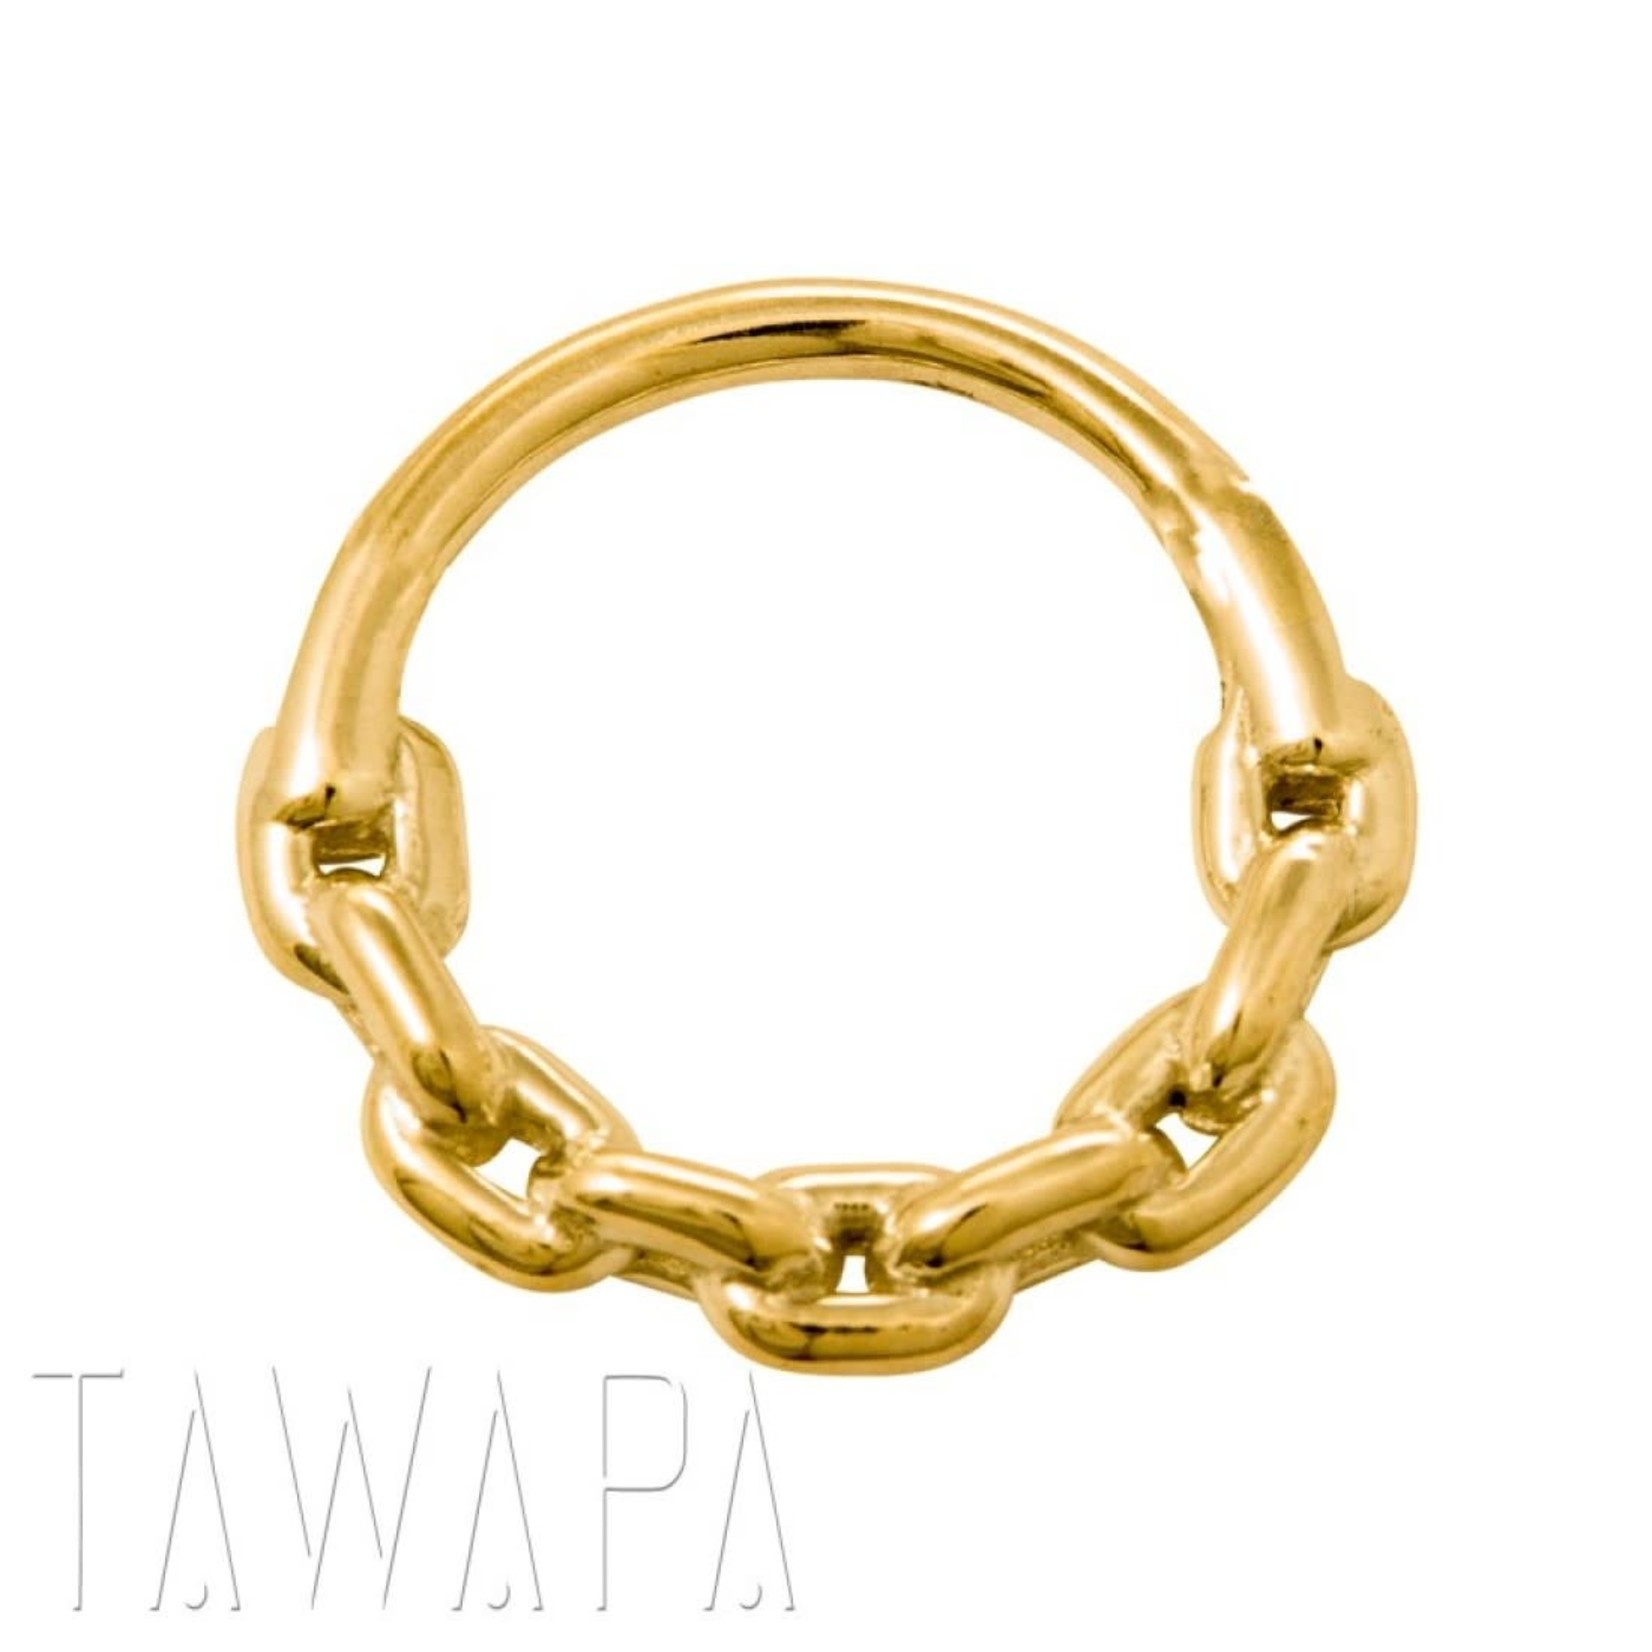 Tawapa Tawapa 18g "Chain Link" seam ring